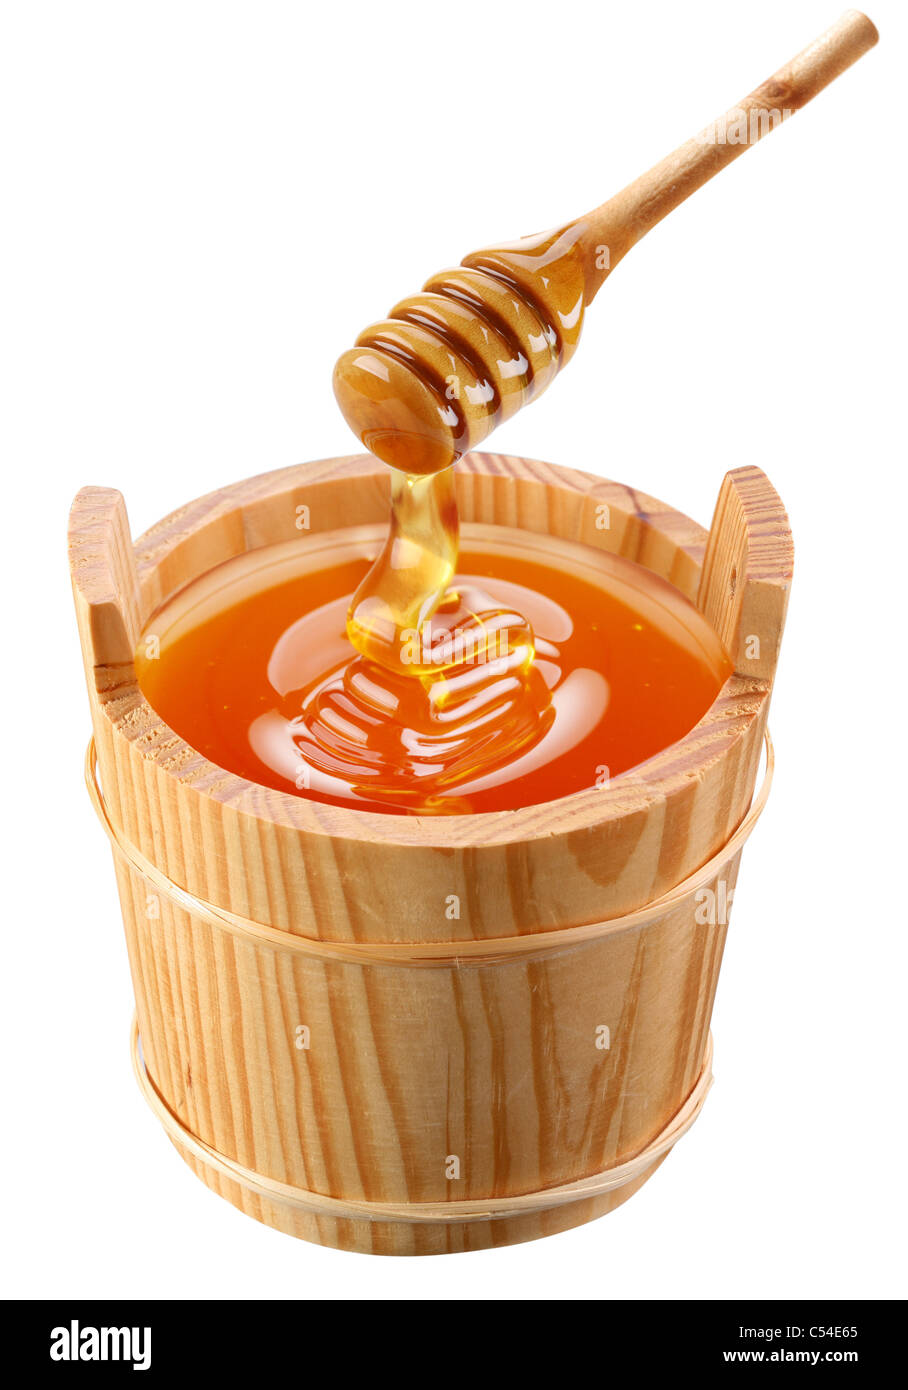 Piggin of honey and wooden stick. Stock Photo